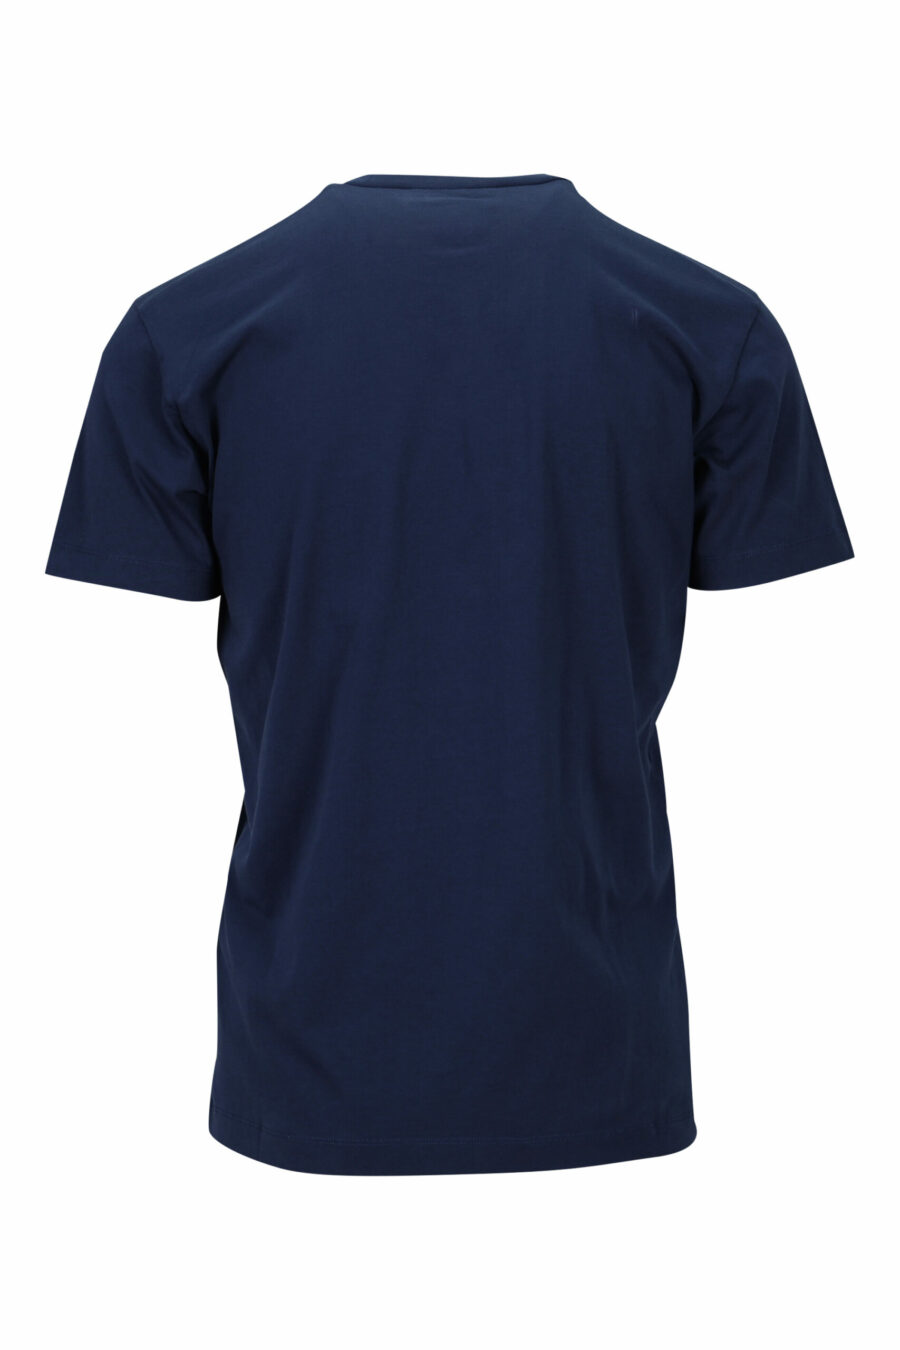 Dark blue T-shirt with maxilogo "ceresio 9, milano" - 8054148504915 1 scaled